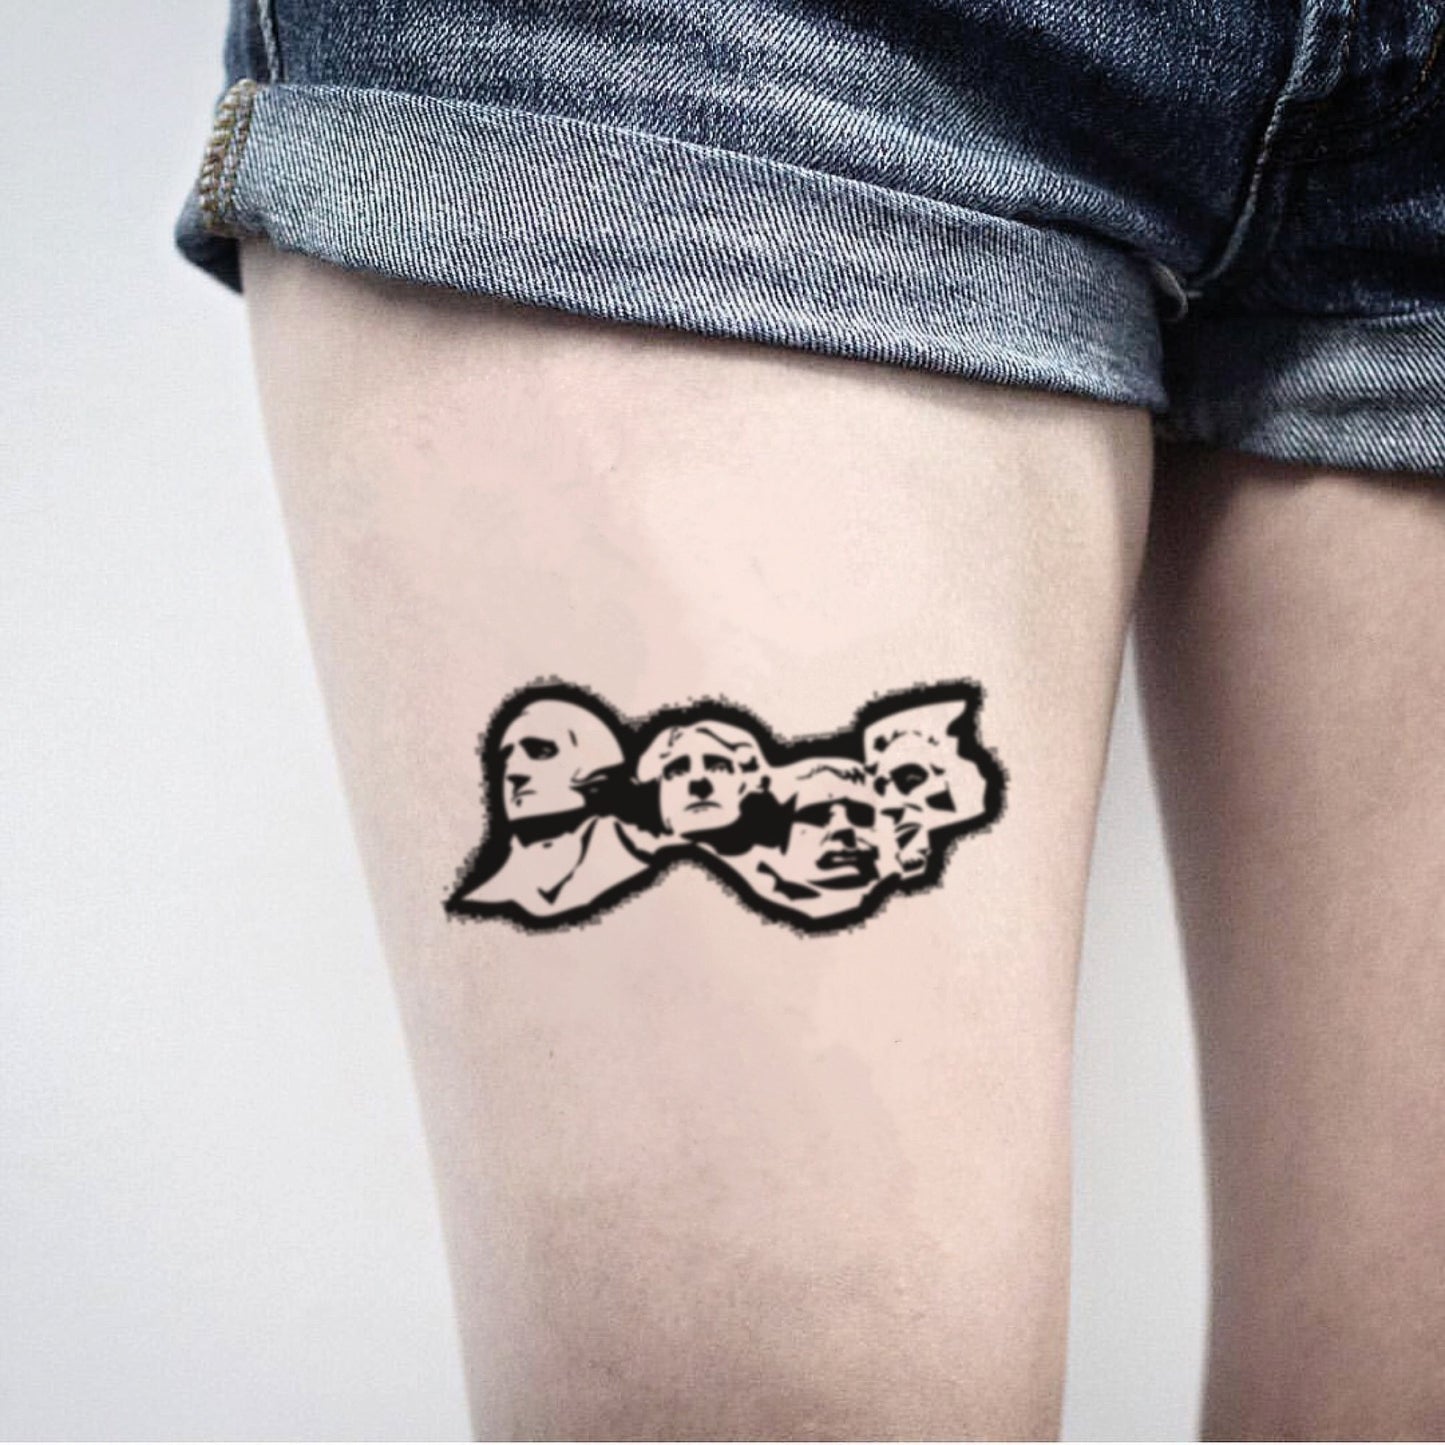 fake medium mount rushmore illustrative temporary tattoo sticker design idea on thigh